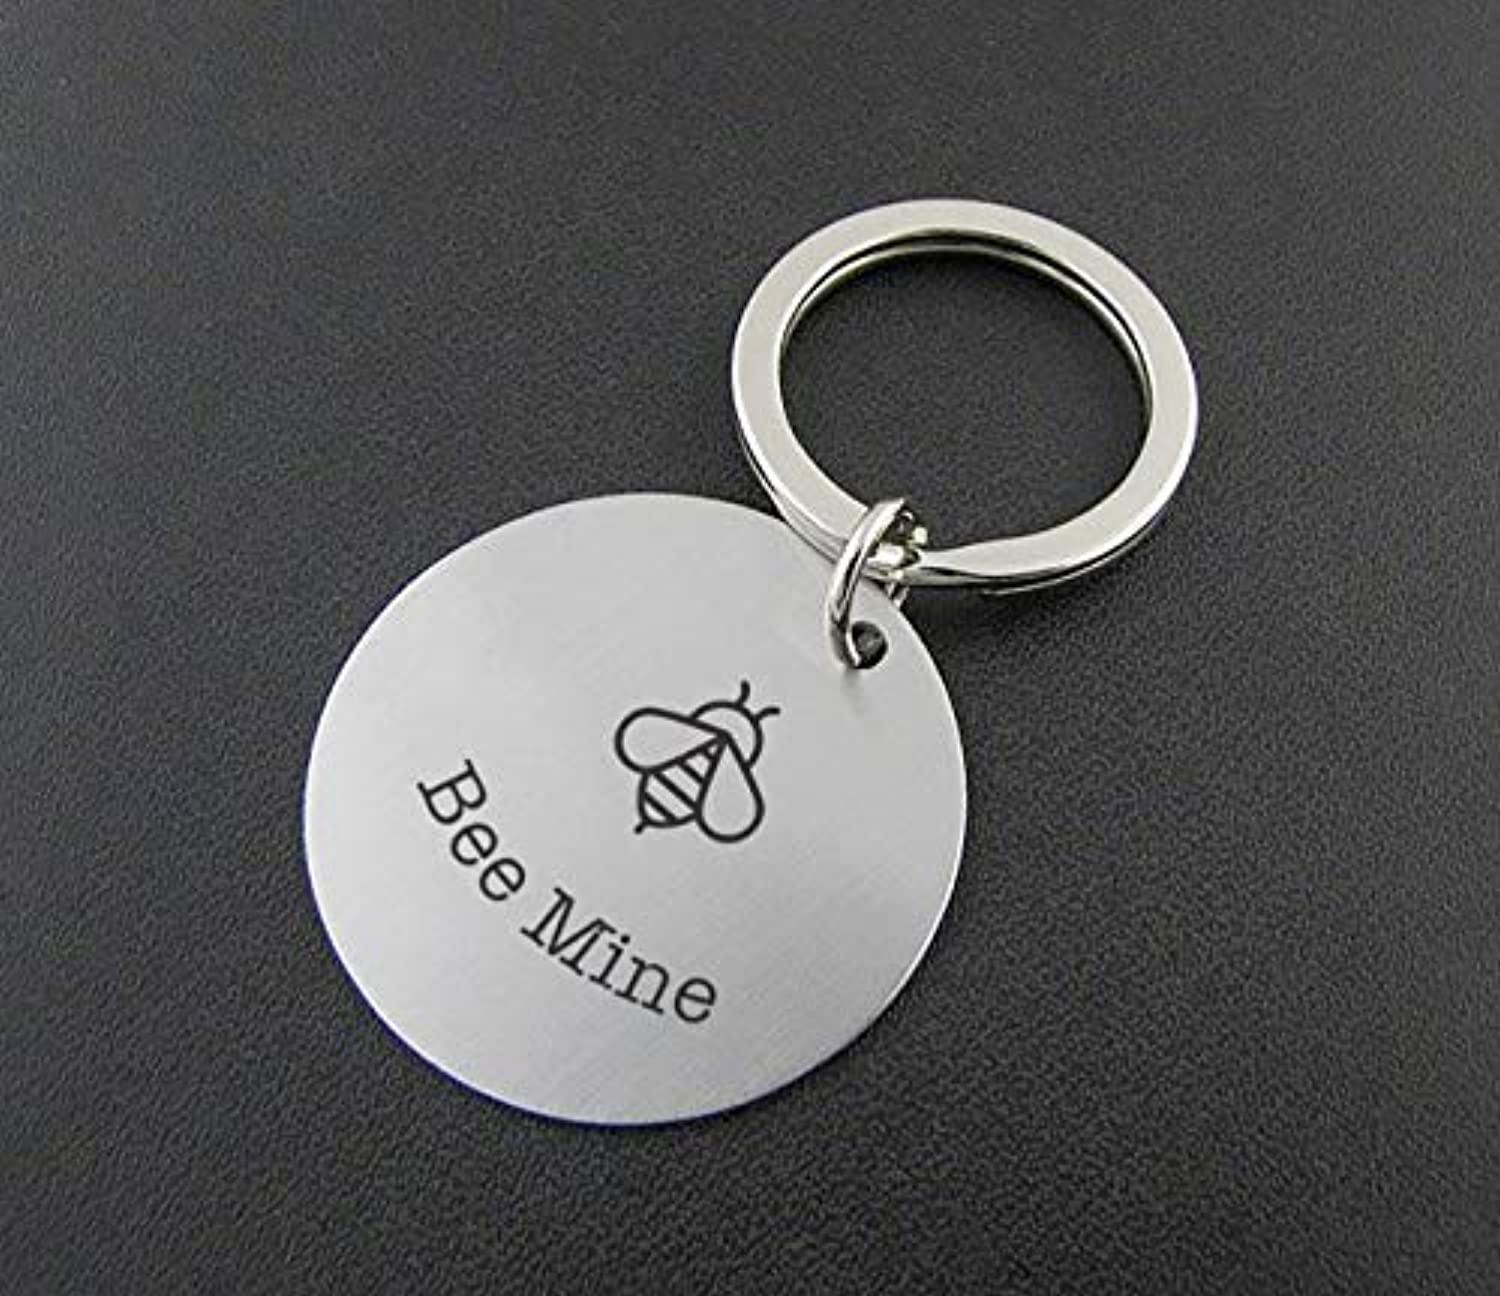 Xiahuyu Couple Keychain Gifts for Boyfriend Girlfriend His India | Ubuy